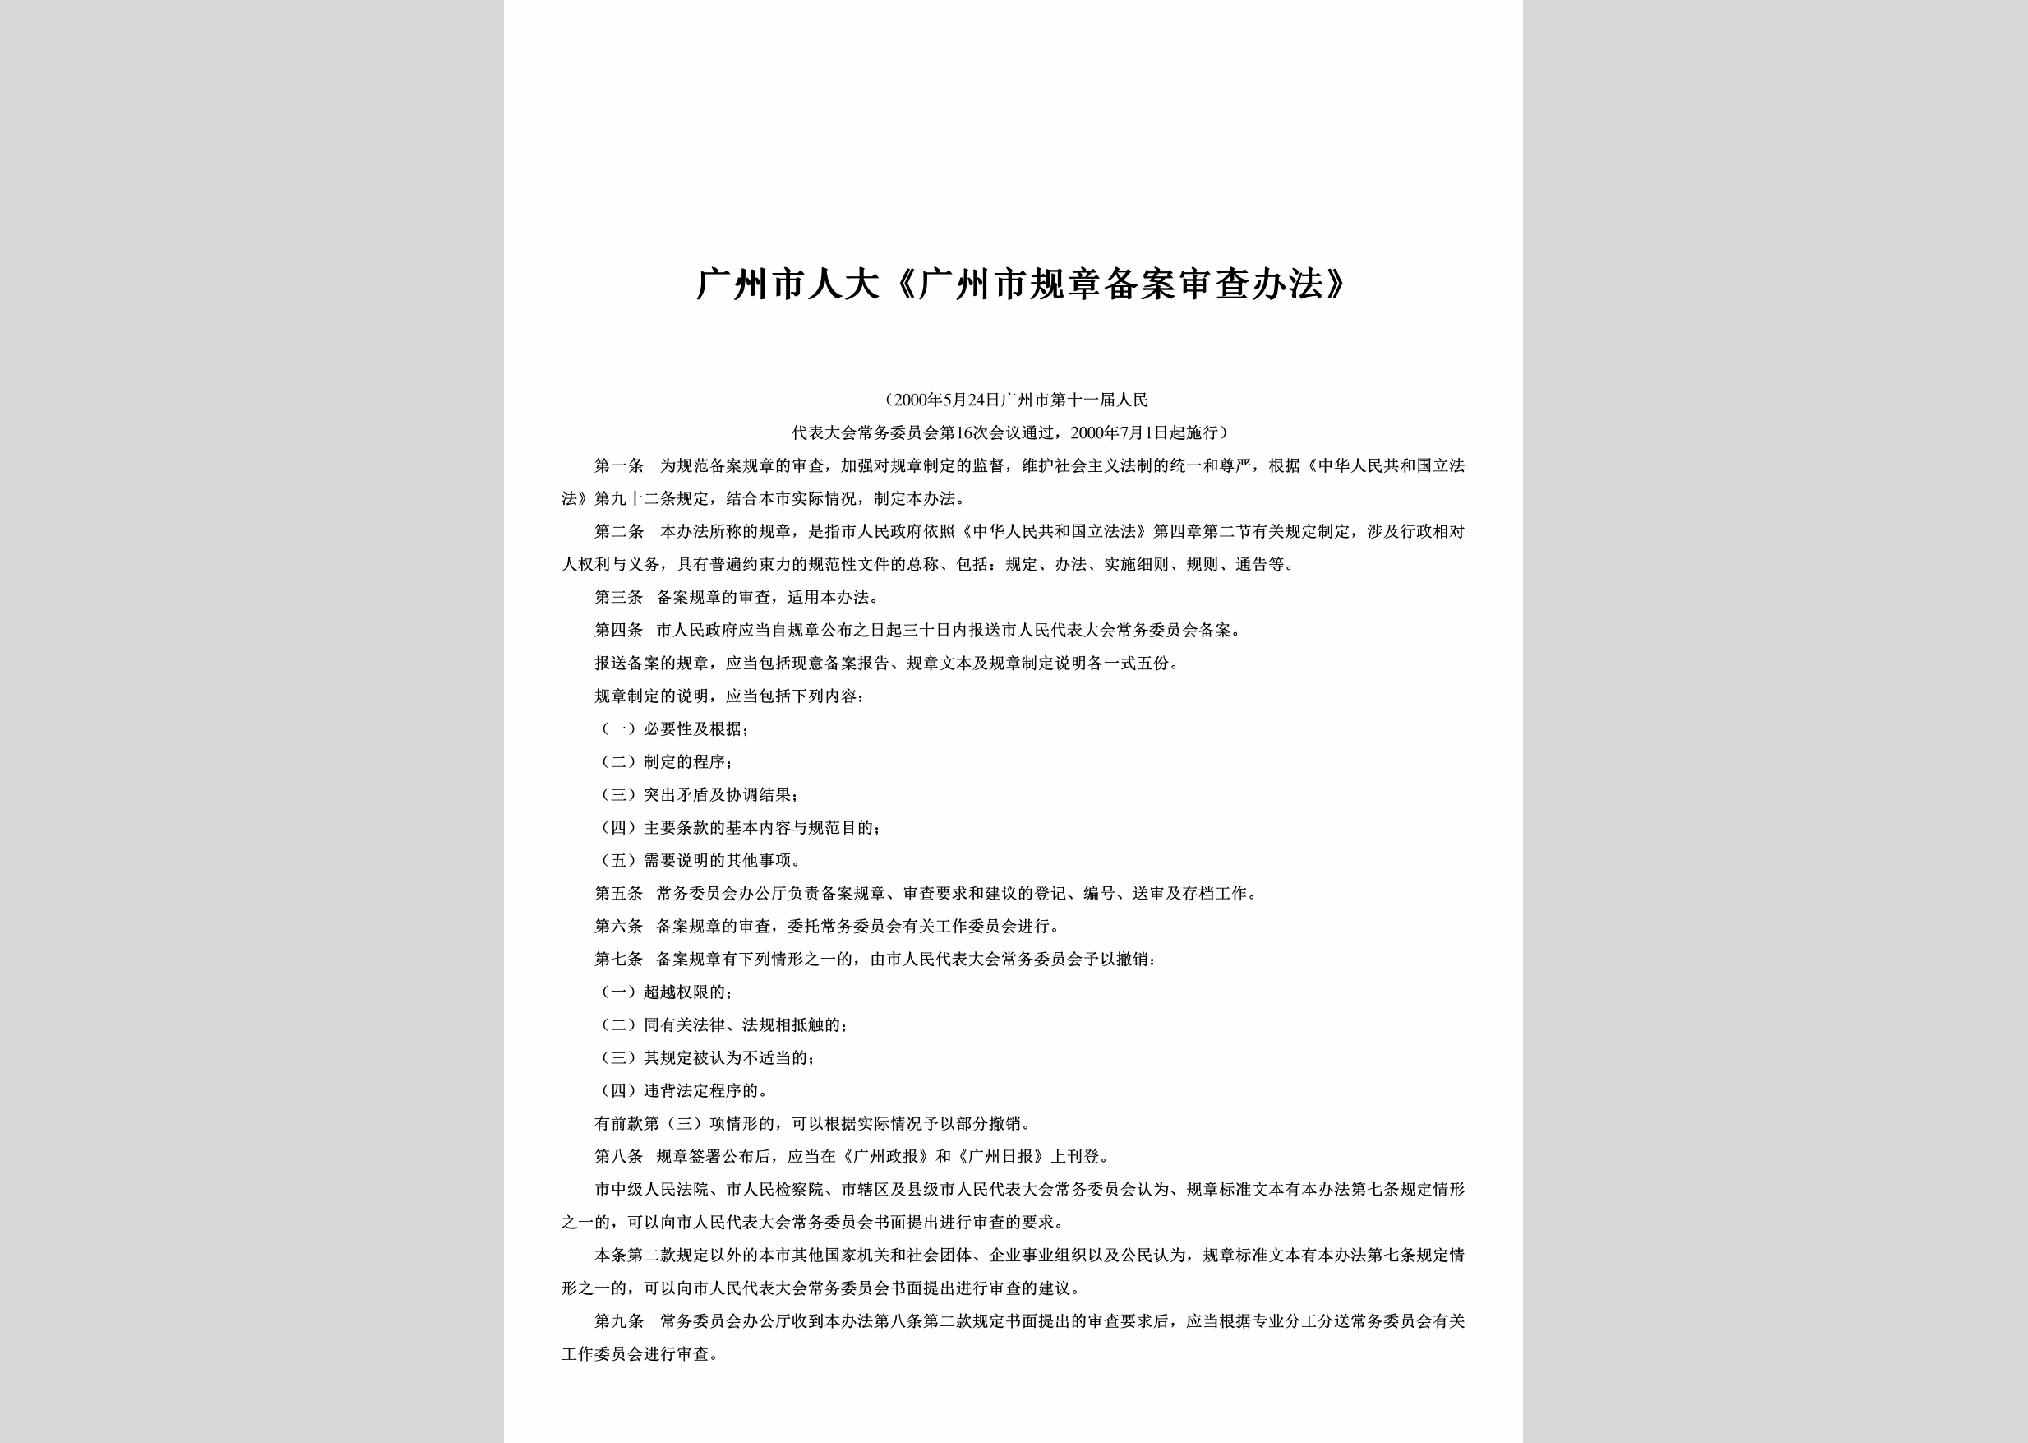 GD-GZBASCBF-2000：《广州市规章备案审查办法》